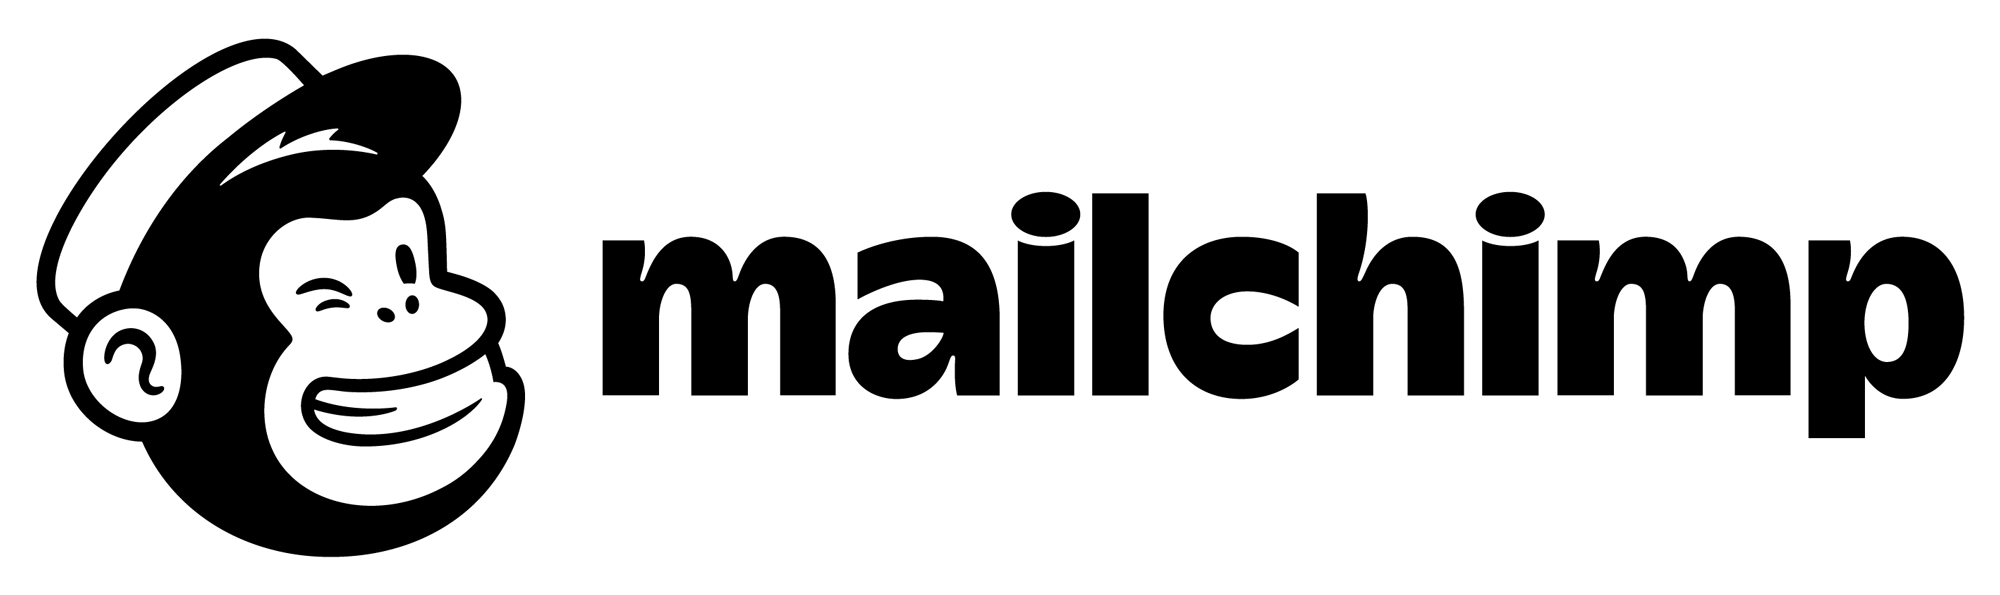 Mailchimp - Swrve Help Center